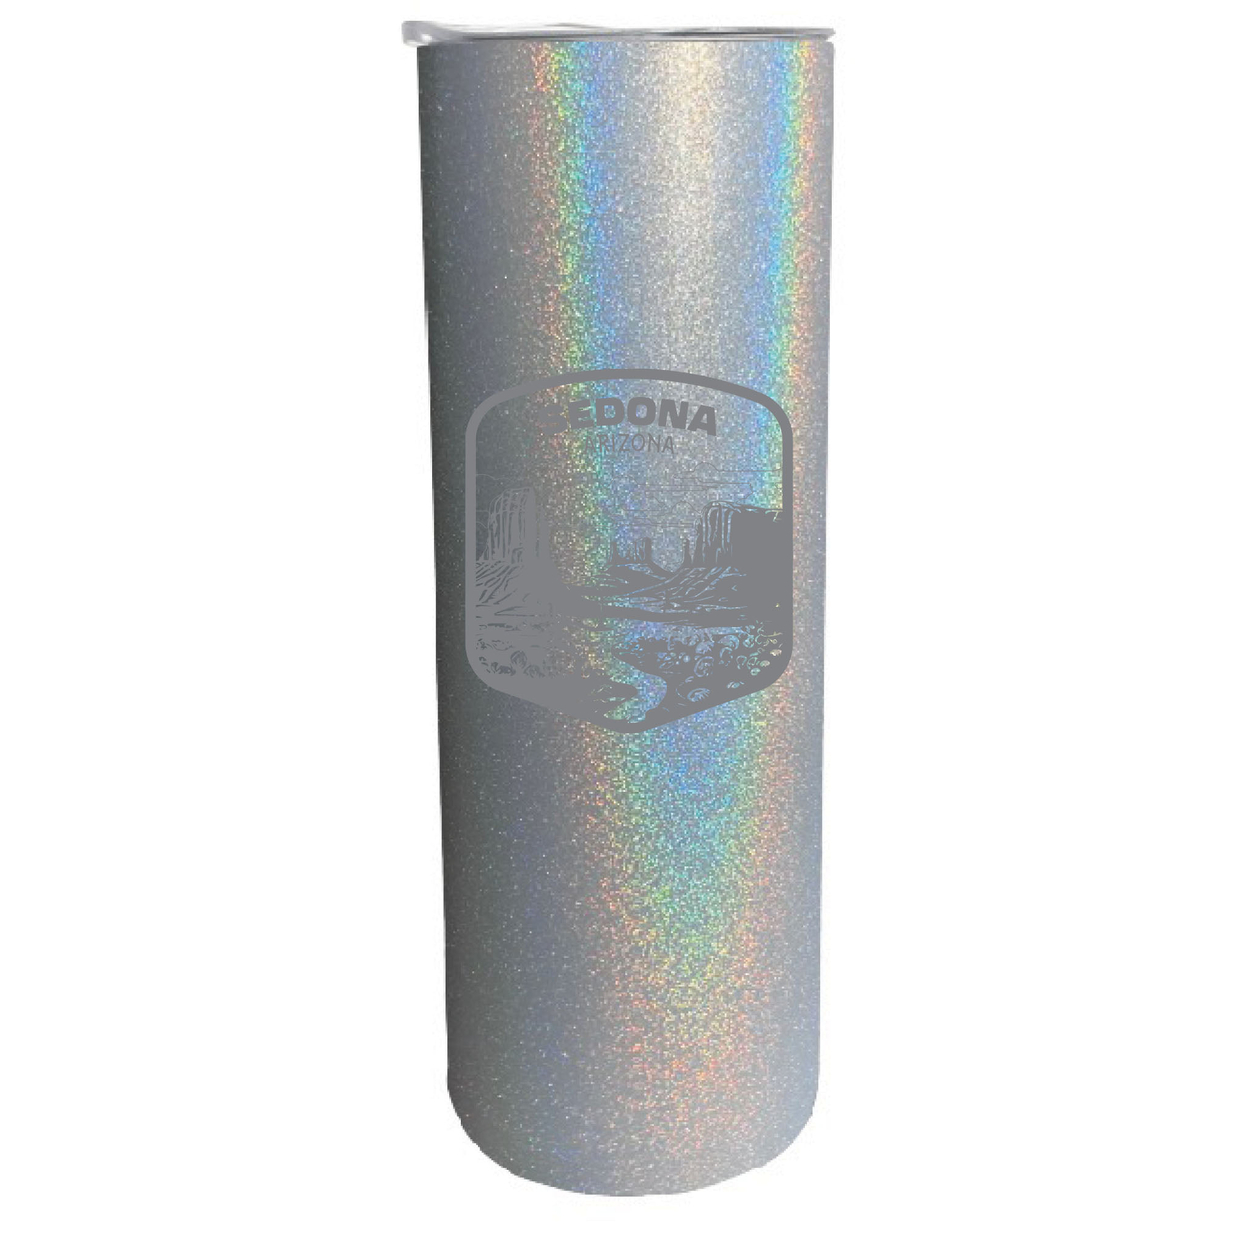 Sedona Arizona Souvenir 20 Oz Engraved Insulated Stainless Steel Skinny Tumbler - Gray Glitter,,4-Pack